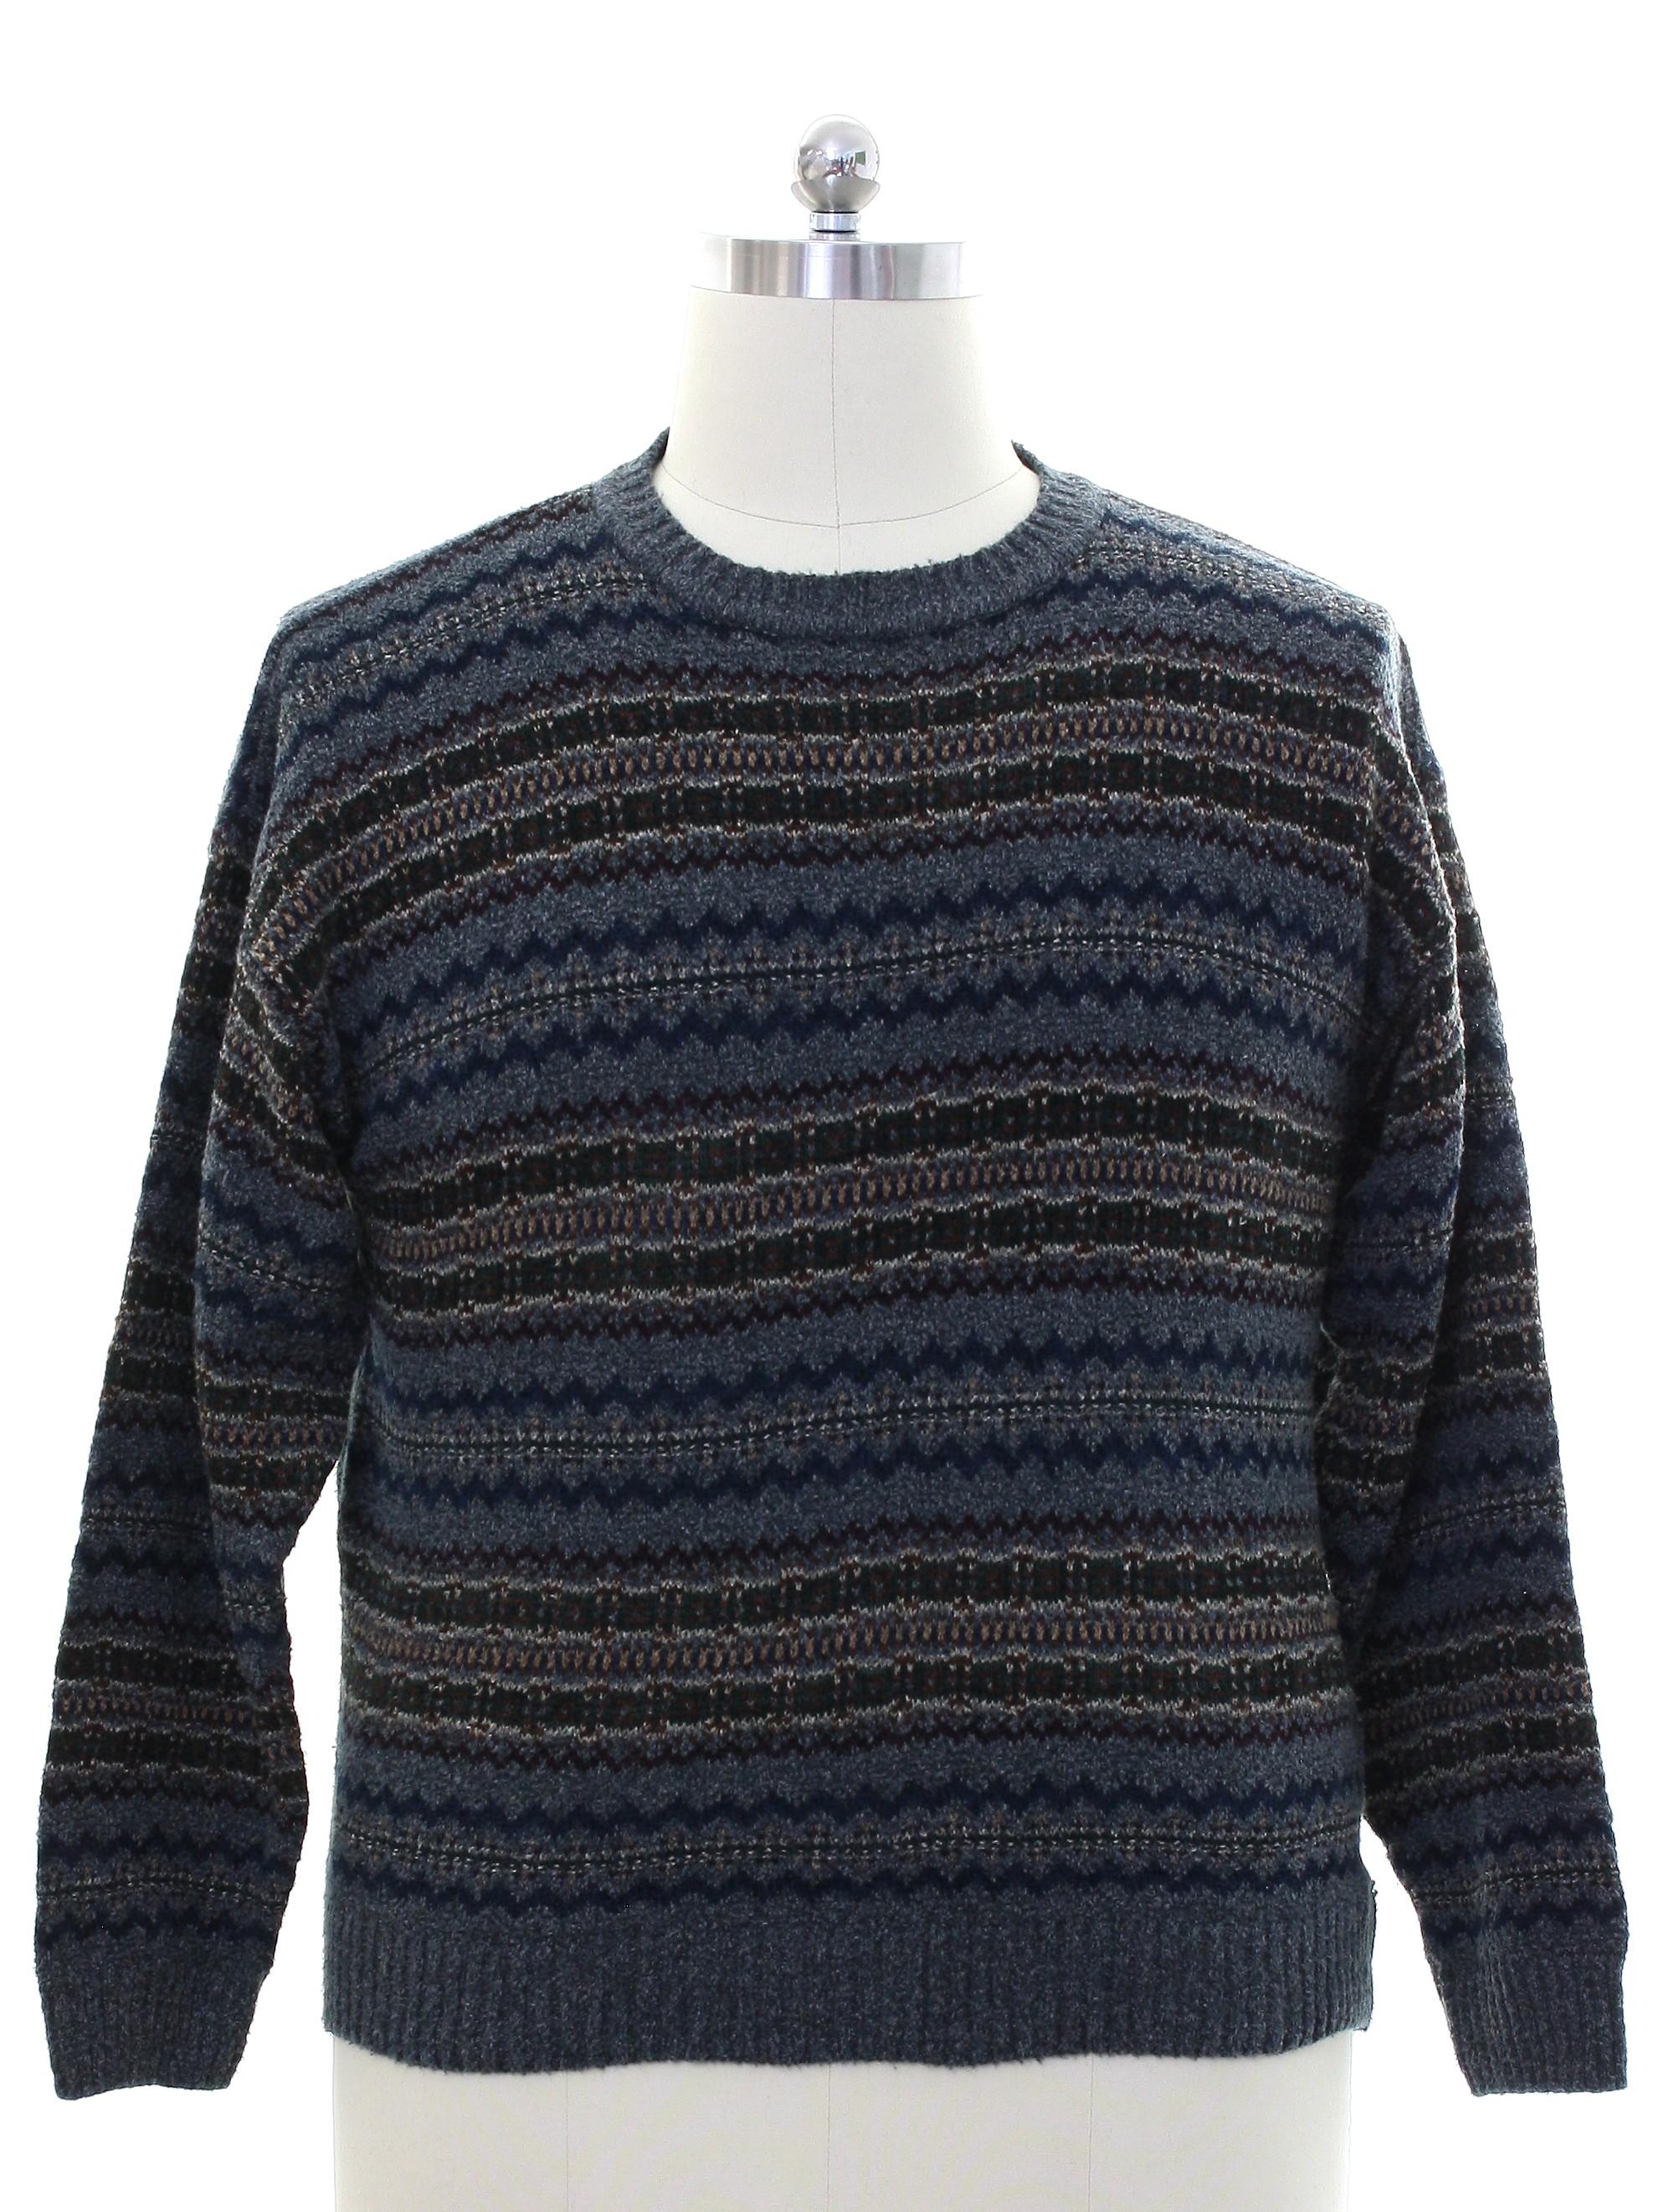 Retro 1990s Sweater: Early 90s -Dockers- Mens smoky gray background ...